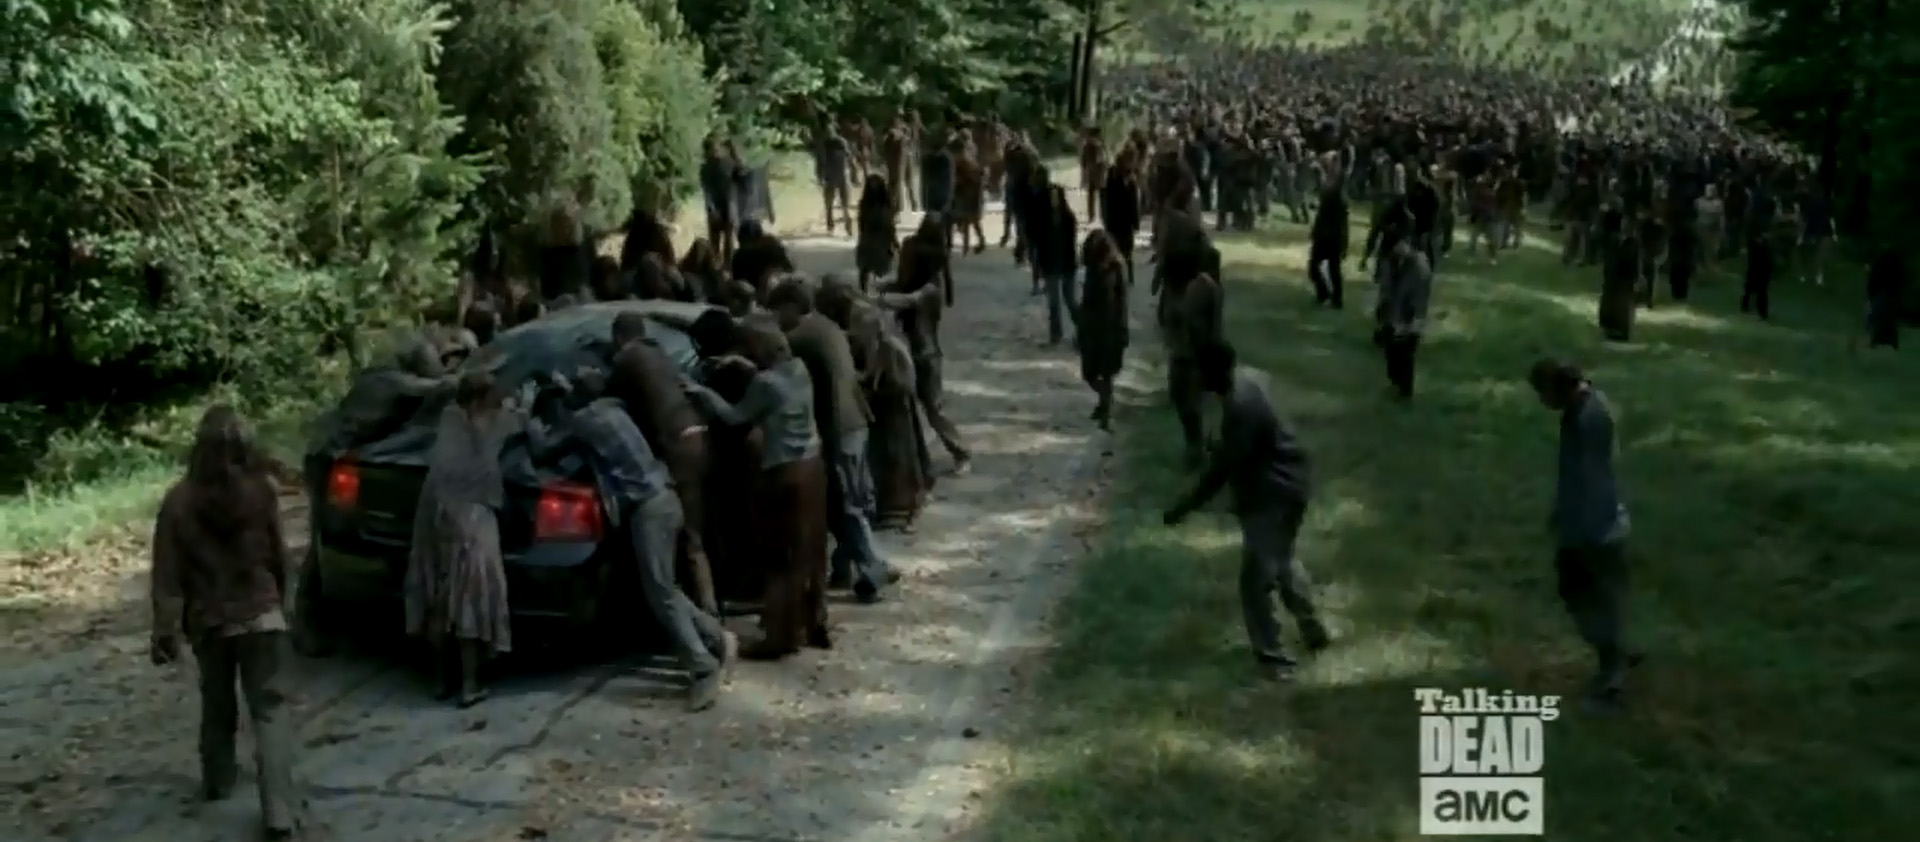 The Walking Dead 4ª Temporada: Episódio S04E03 “Isolation” terá horda com 7.500 Walkers